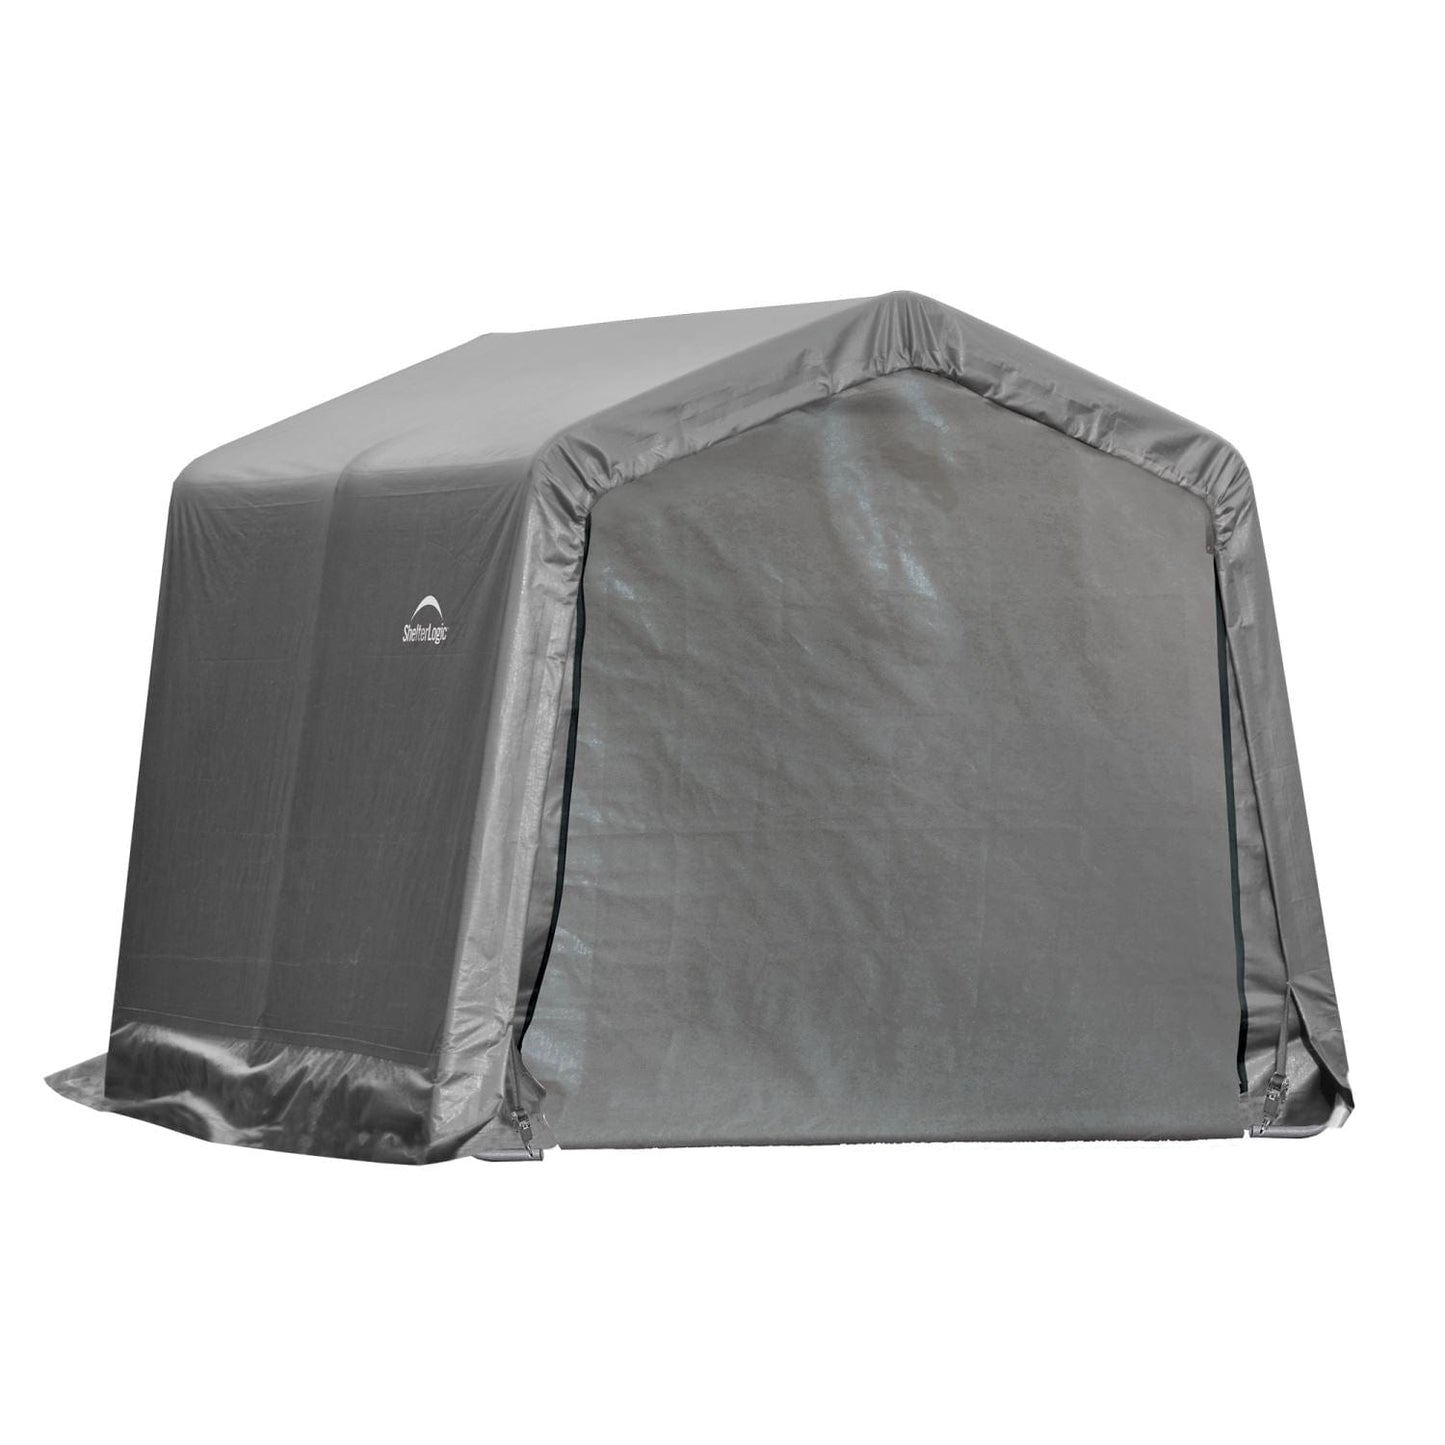 ShelterLogic Shed-in-a-Box 10 x 10 x 8 ft. Gray - mygreenhousestore.com